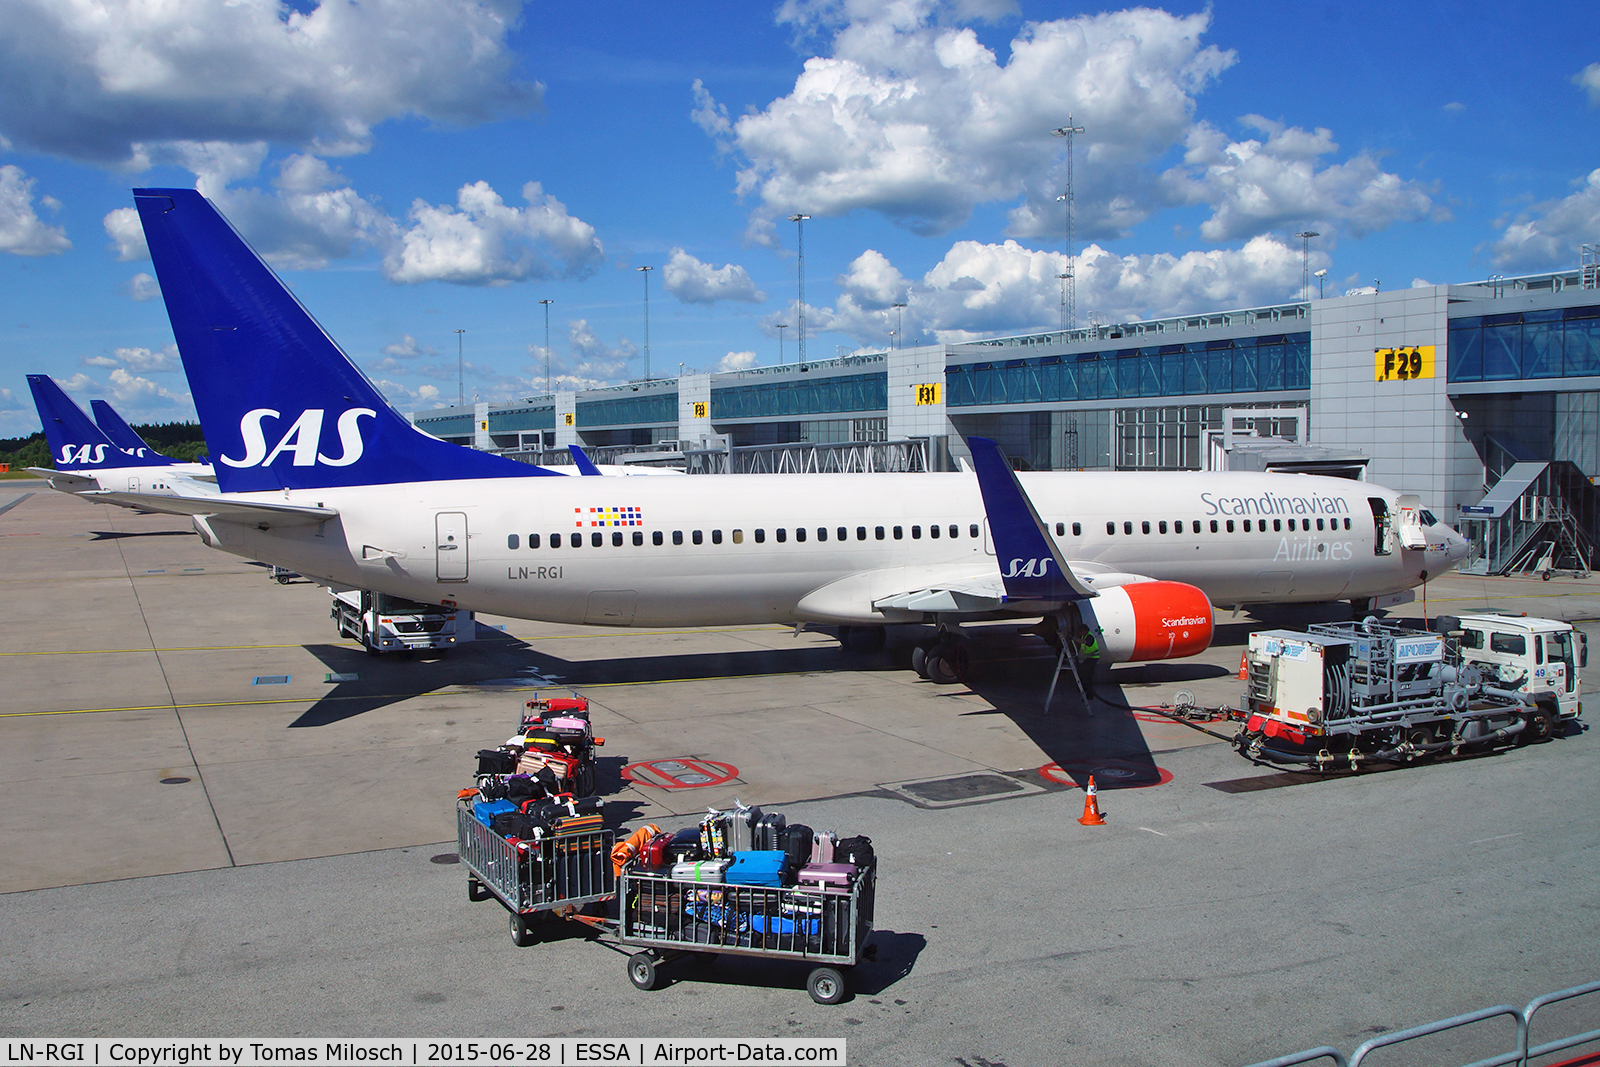 LN-RGI, 2014 Boeing 737-86N C/N 35646, Full action at the SAS terminal in Arlanda